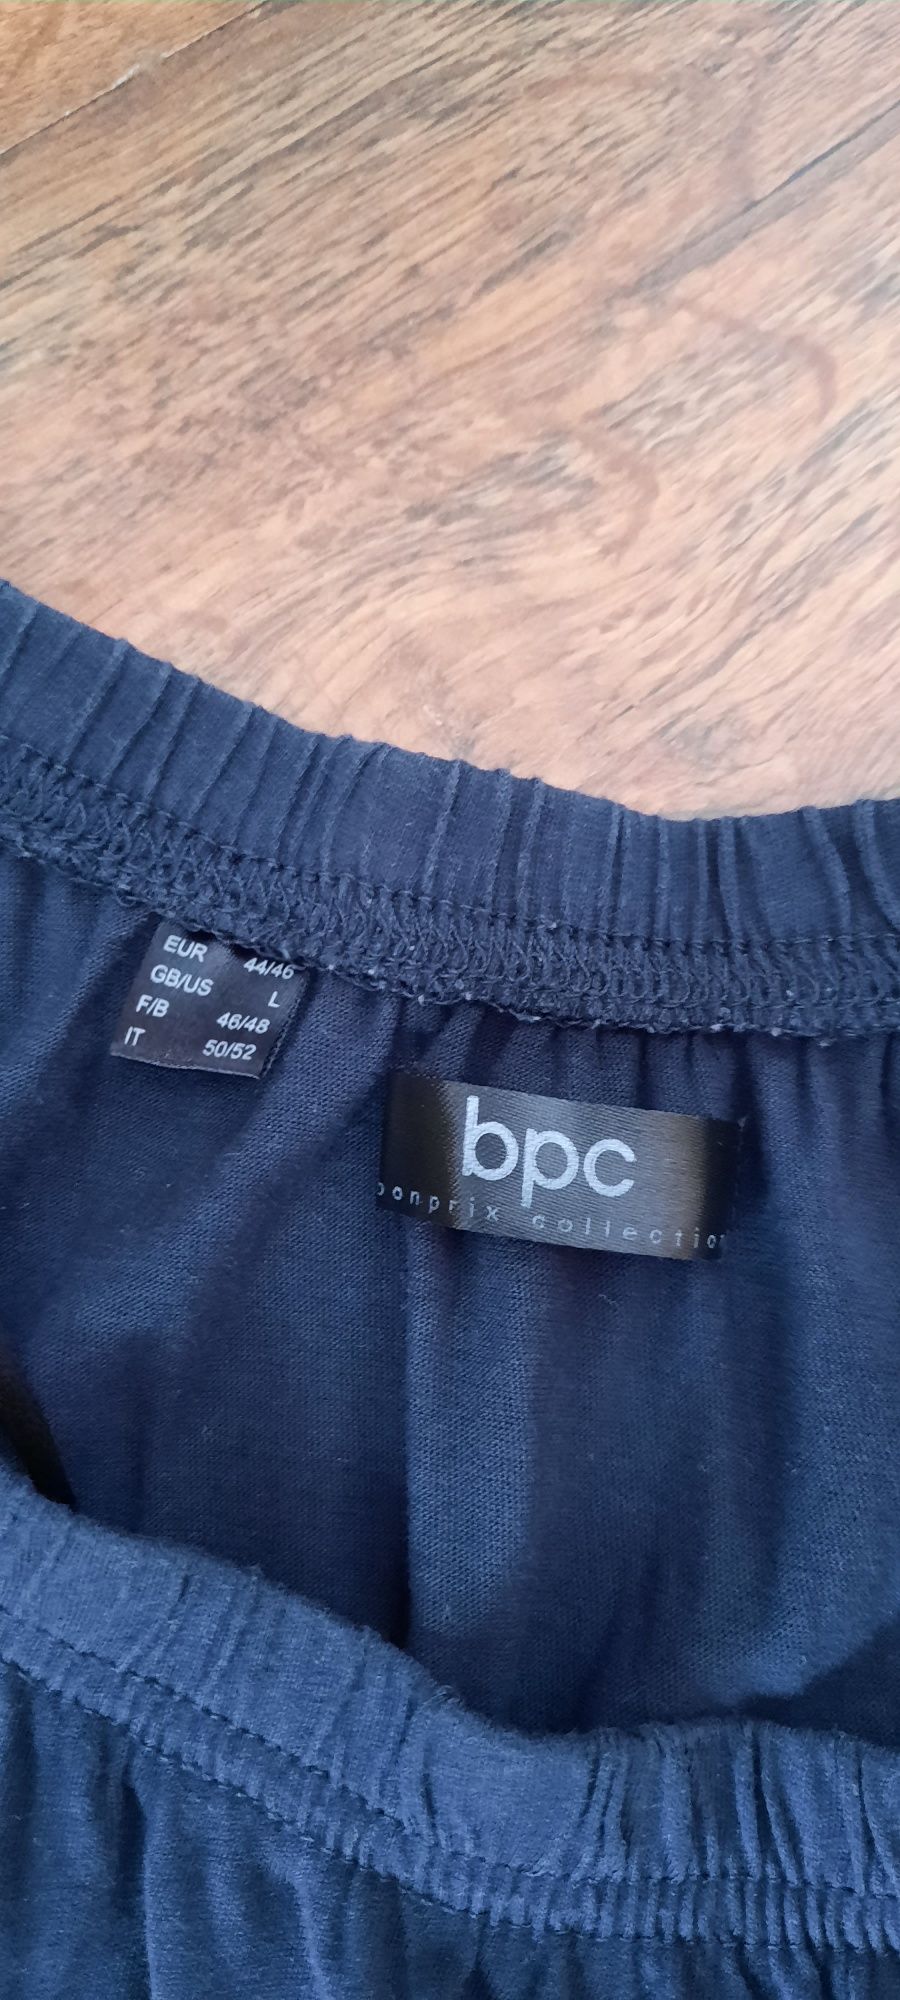 Damska bluzka firmy Bonprix